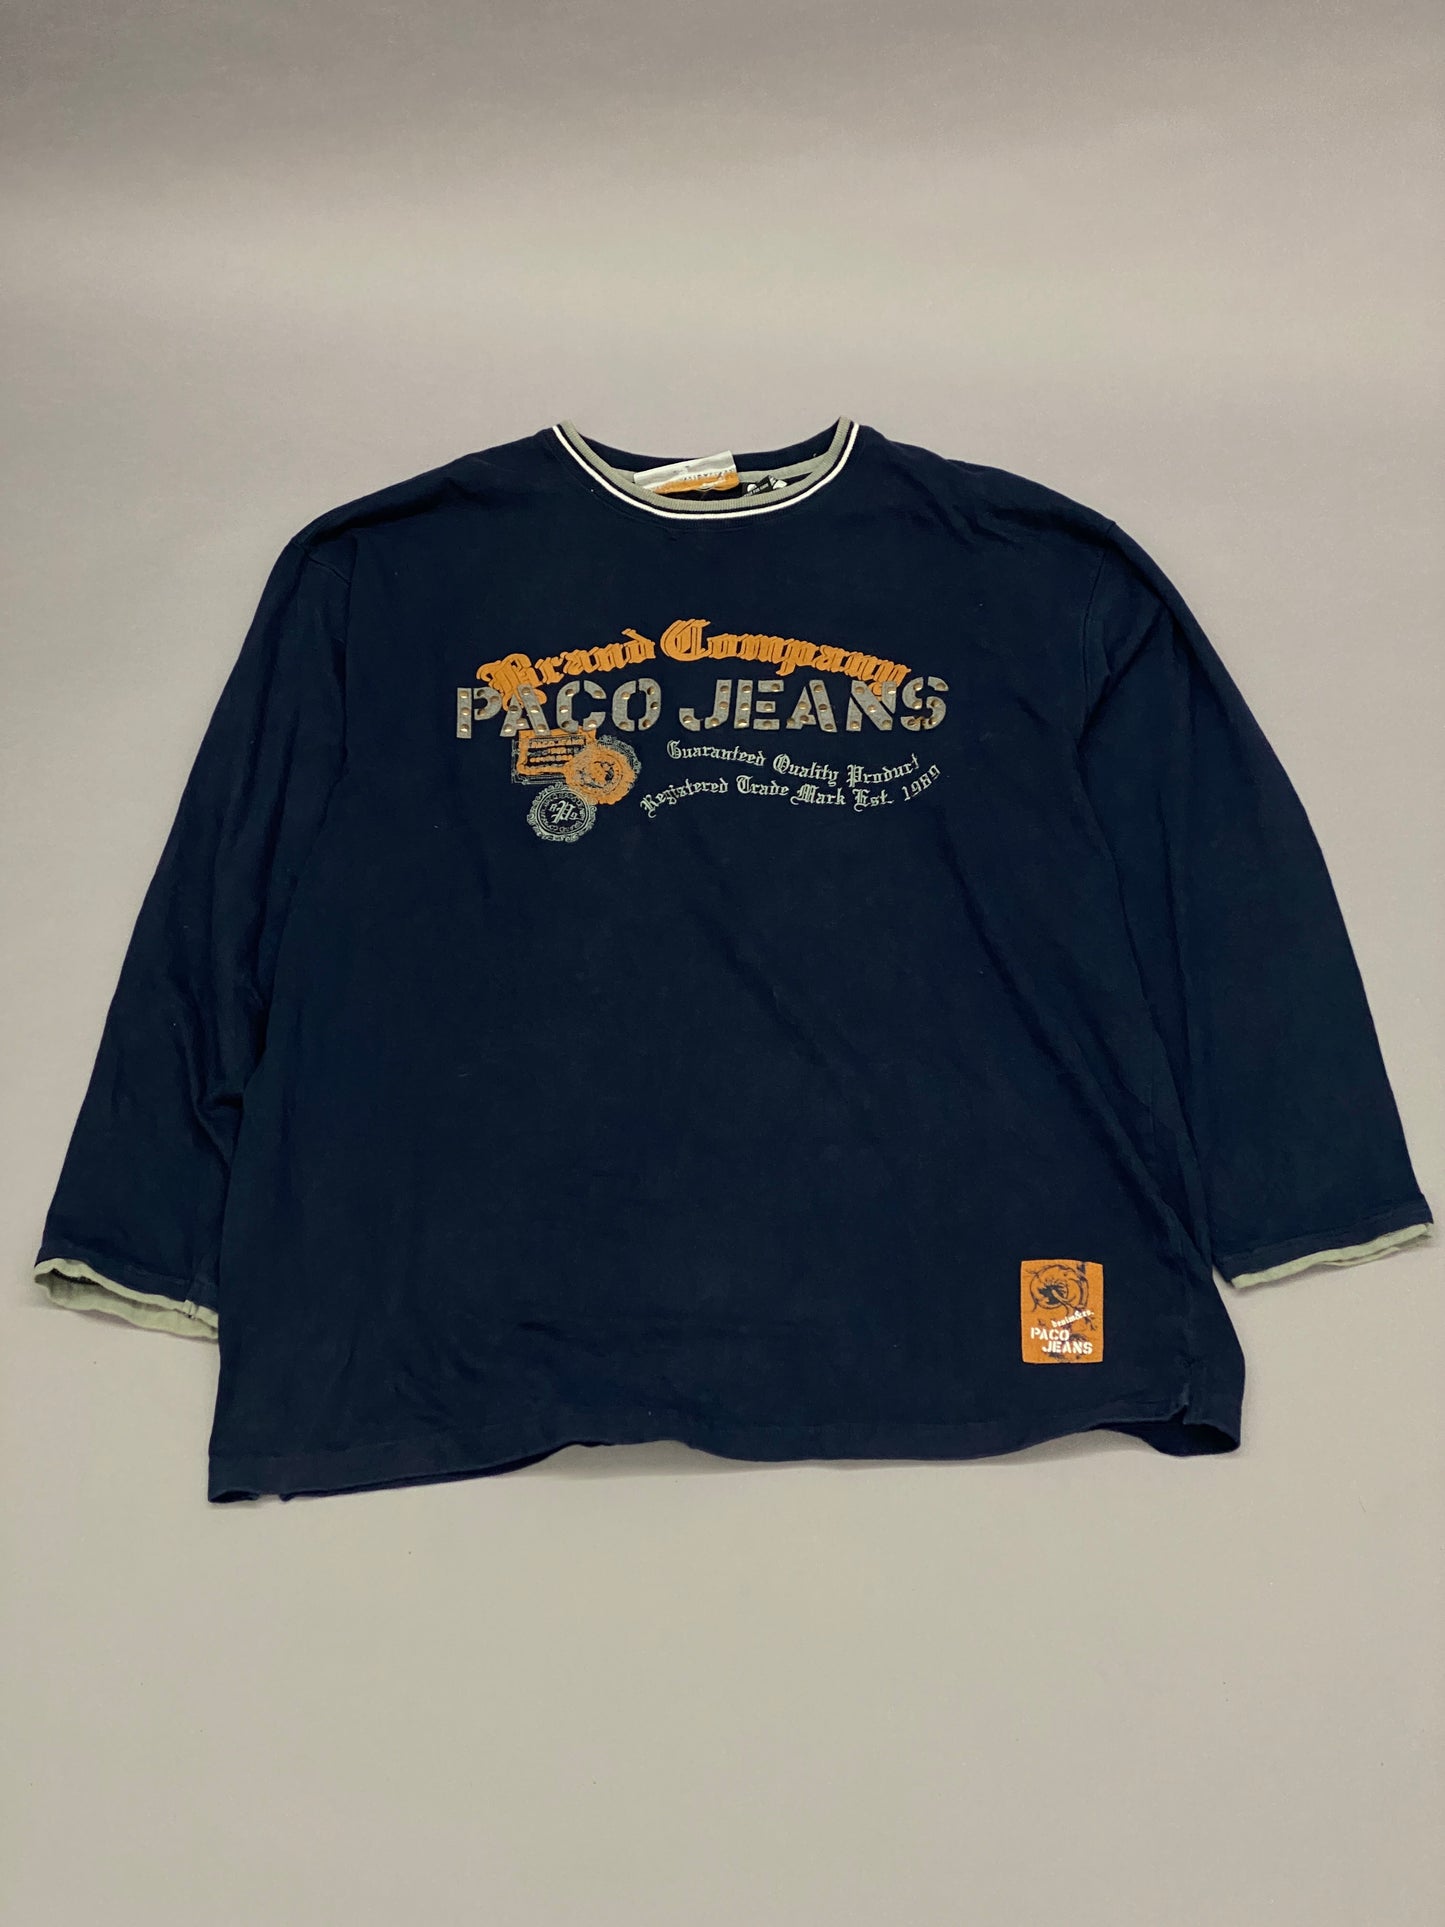 Paco Jeans Vintage T-shirt